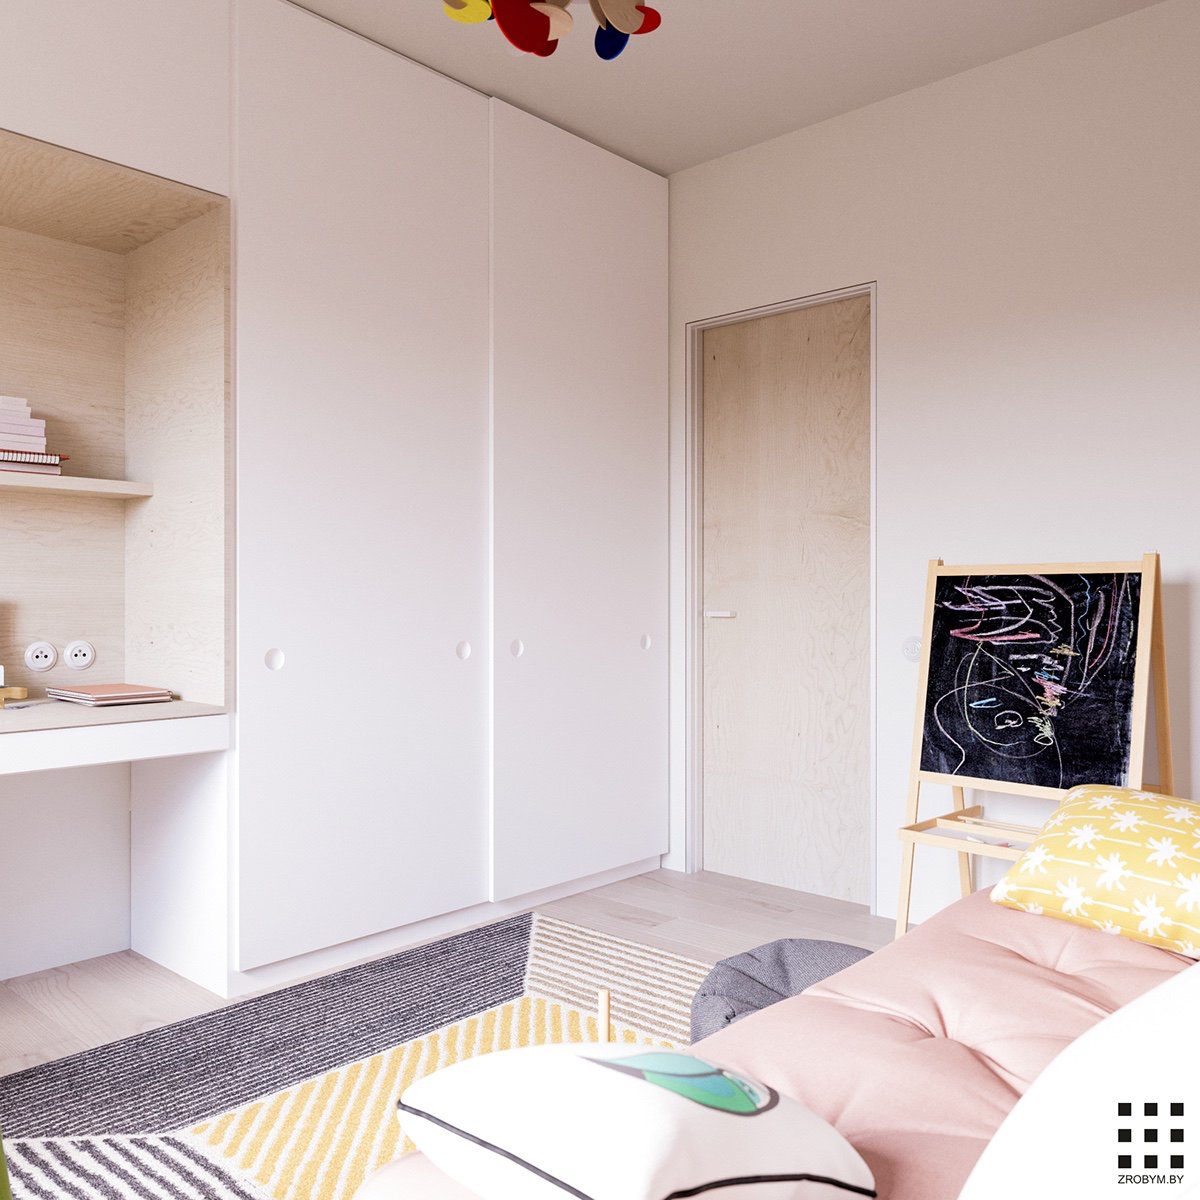 Скандинавский интерьер для семьи с ребенком от Zrobym Architects